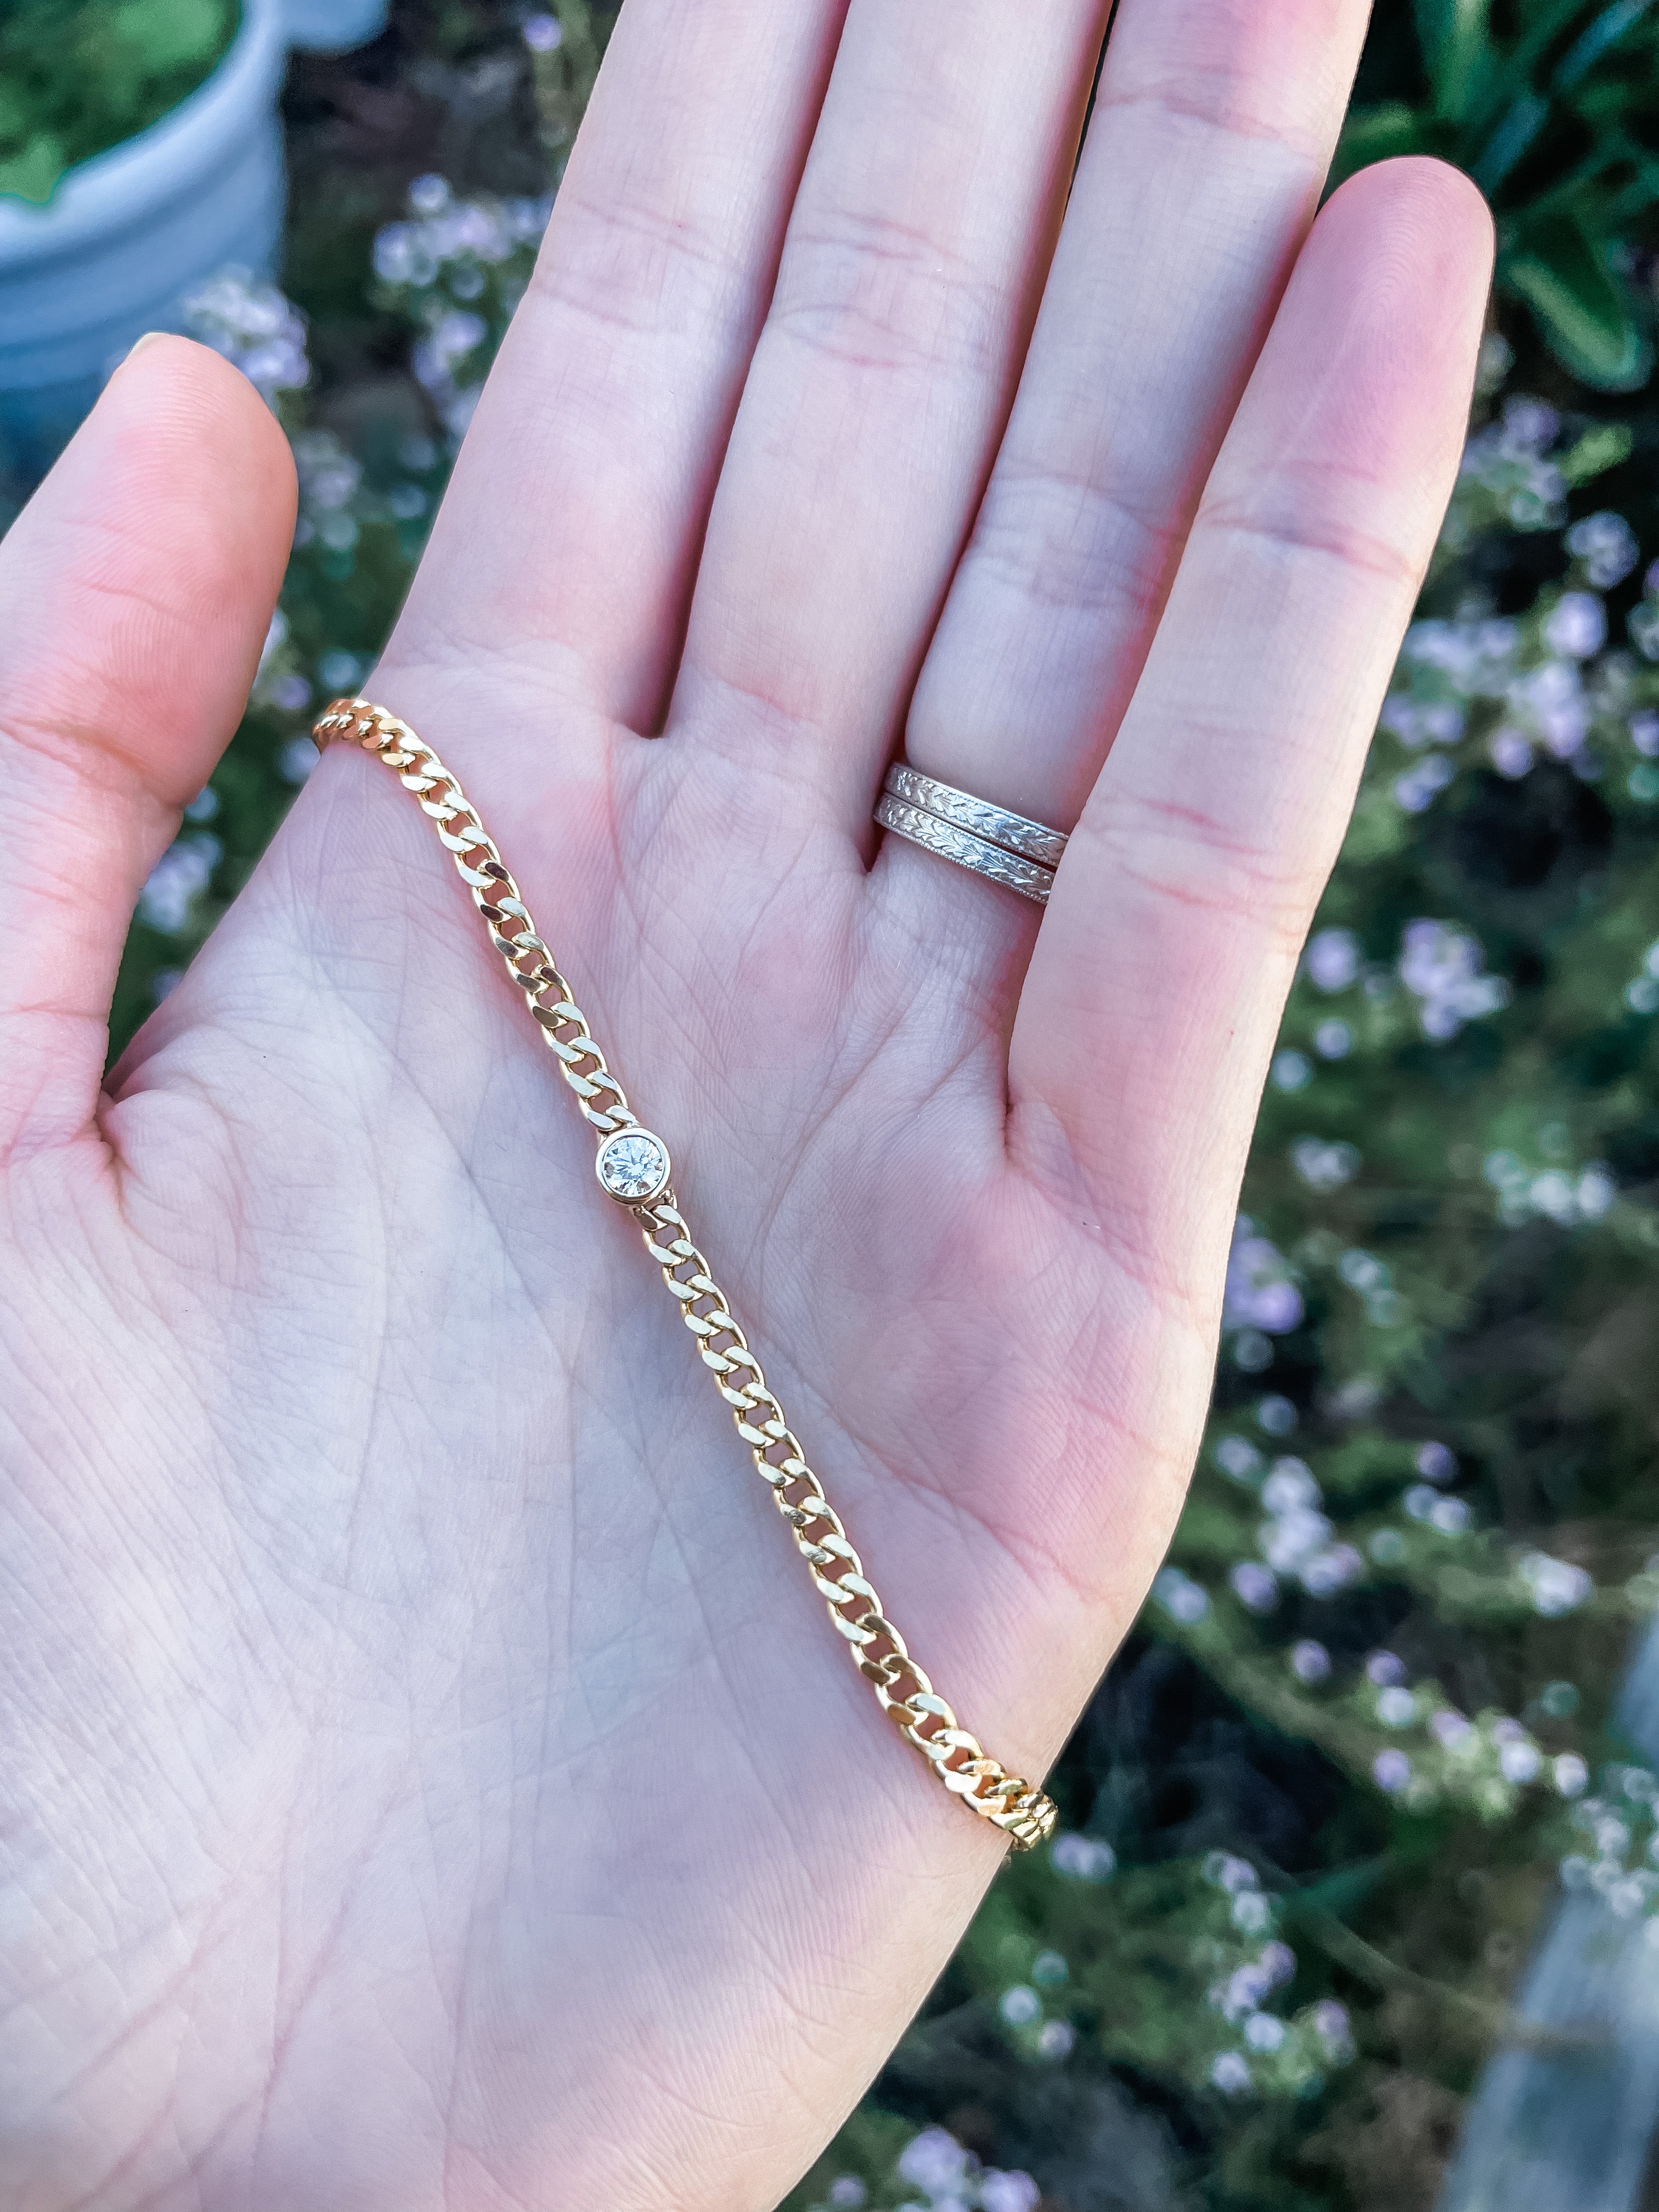 Bezel-Set Diamond Curb Chain Necklace